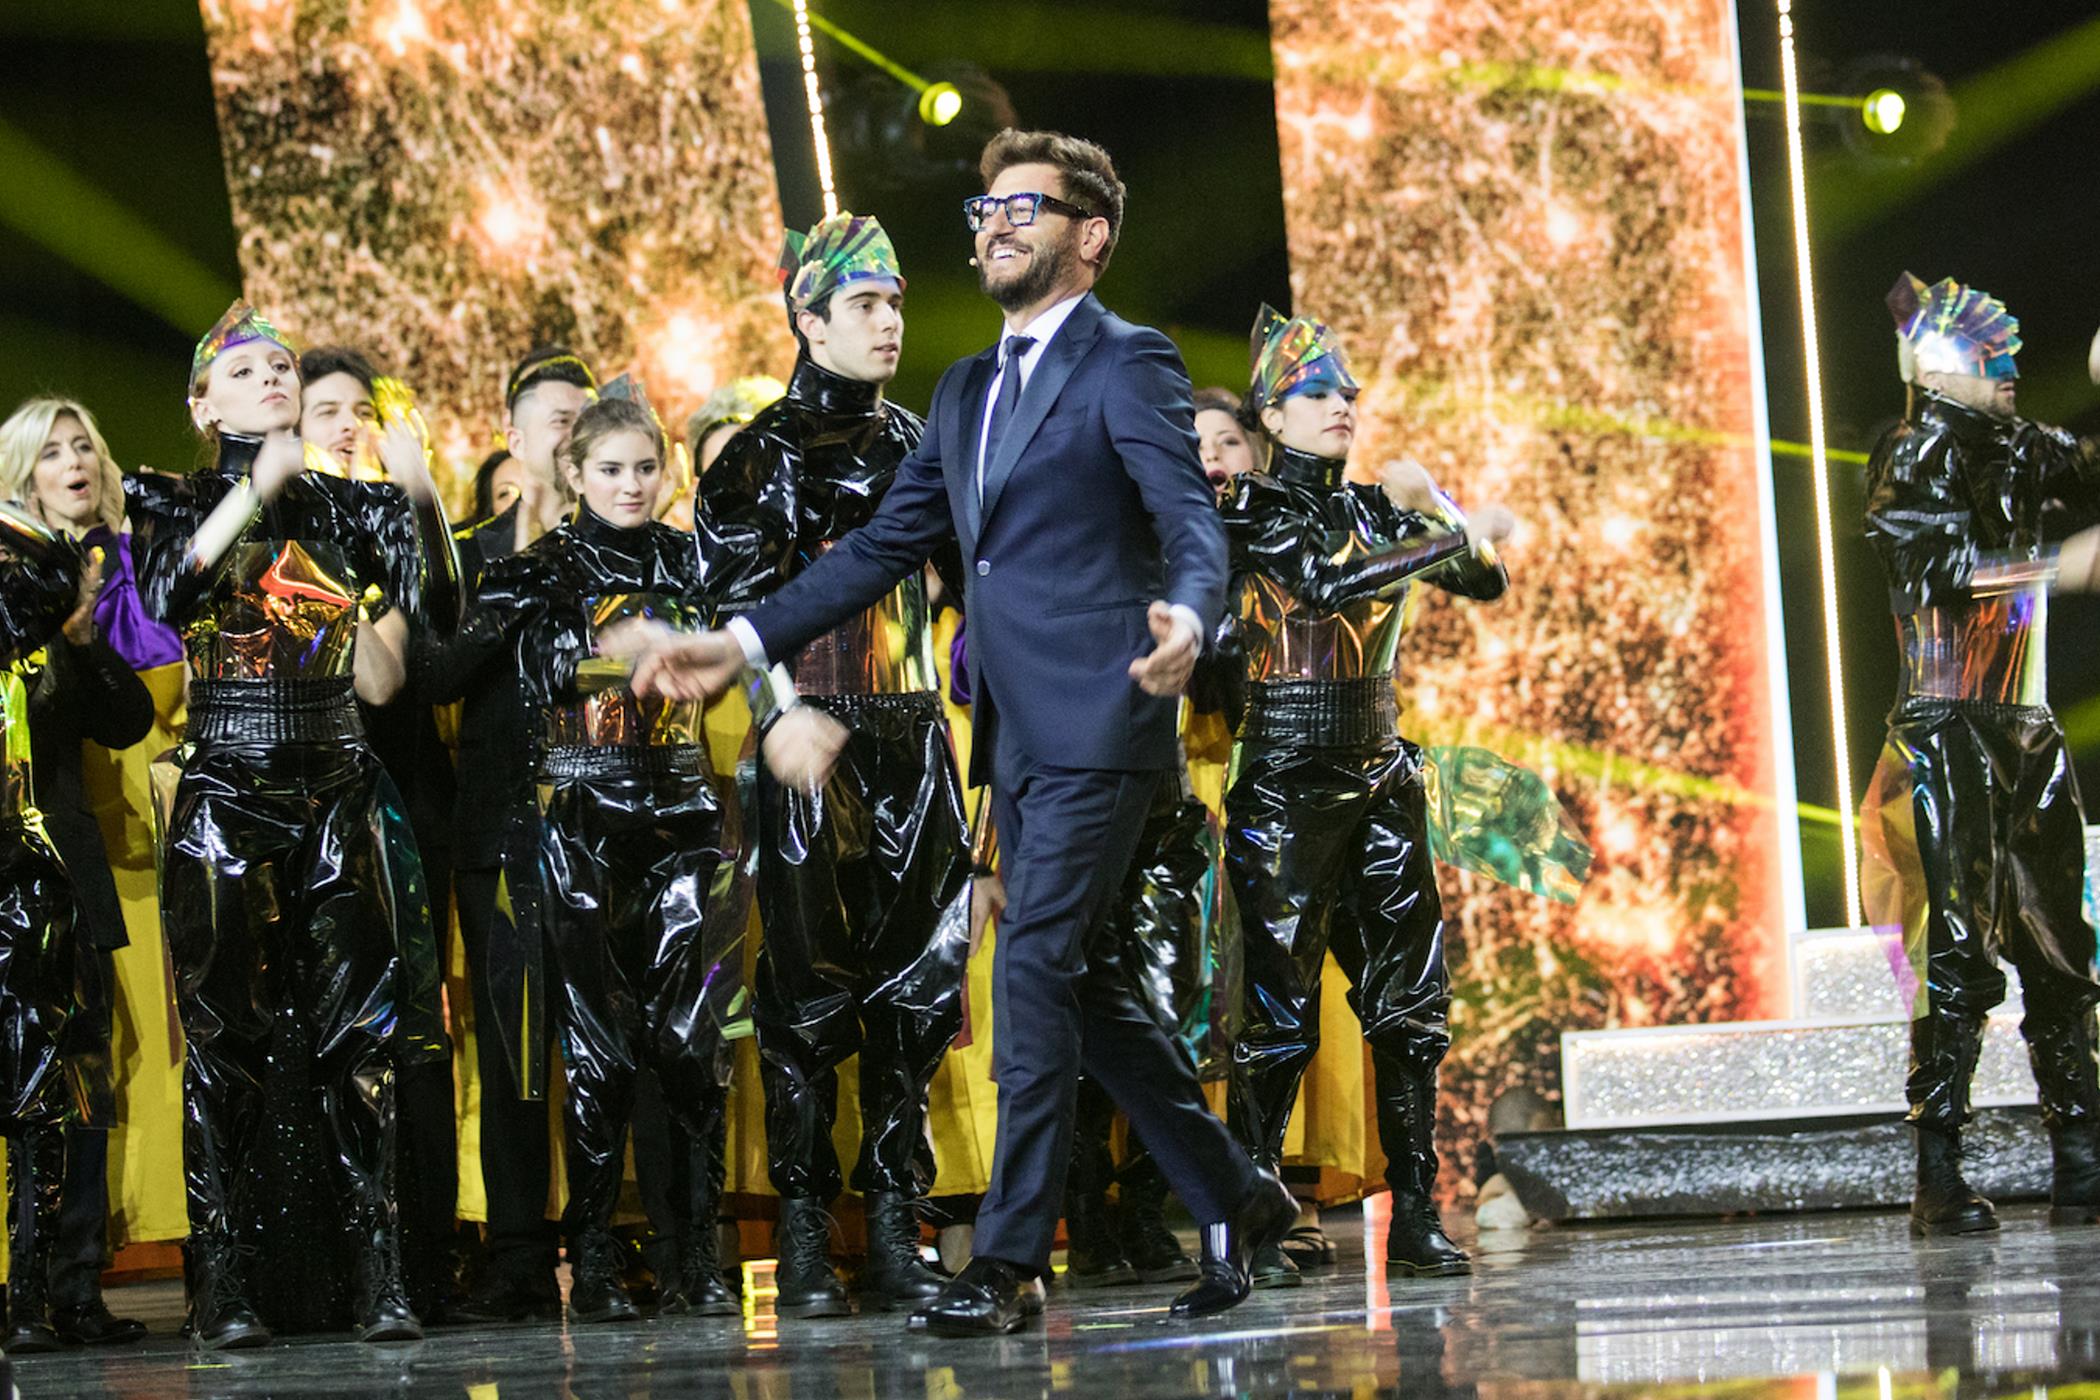 Italia's Got Talent 2020 - La Finale [credit: Sky]